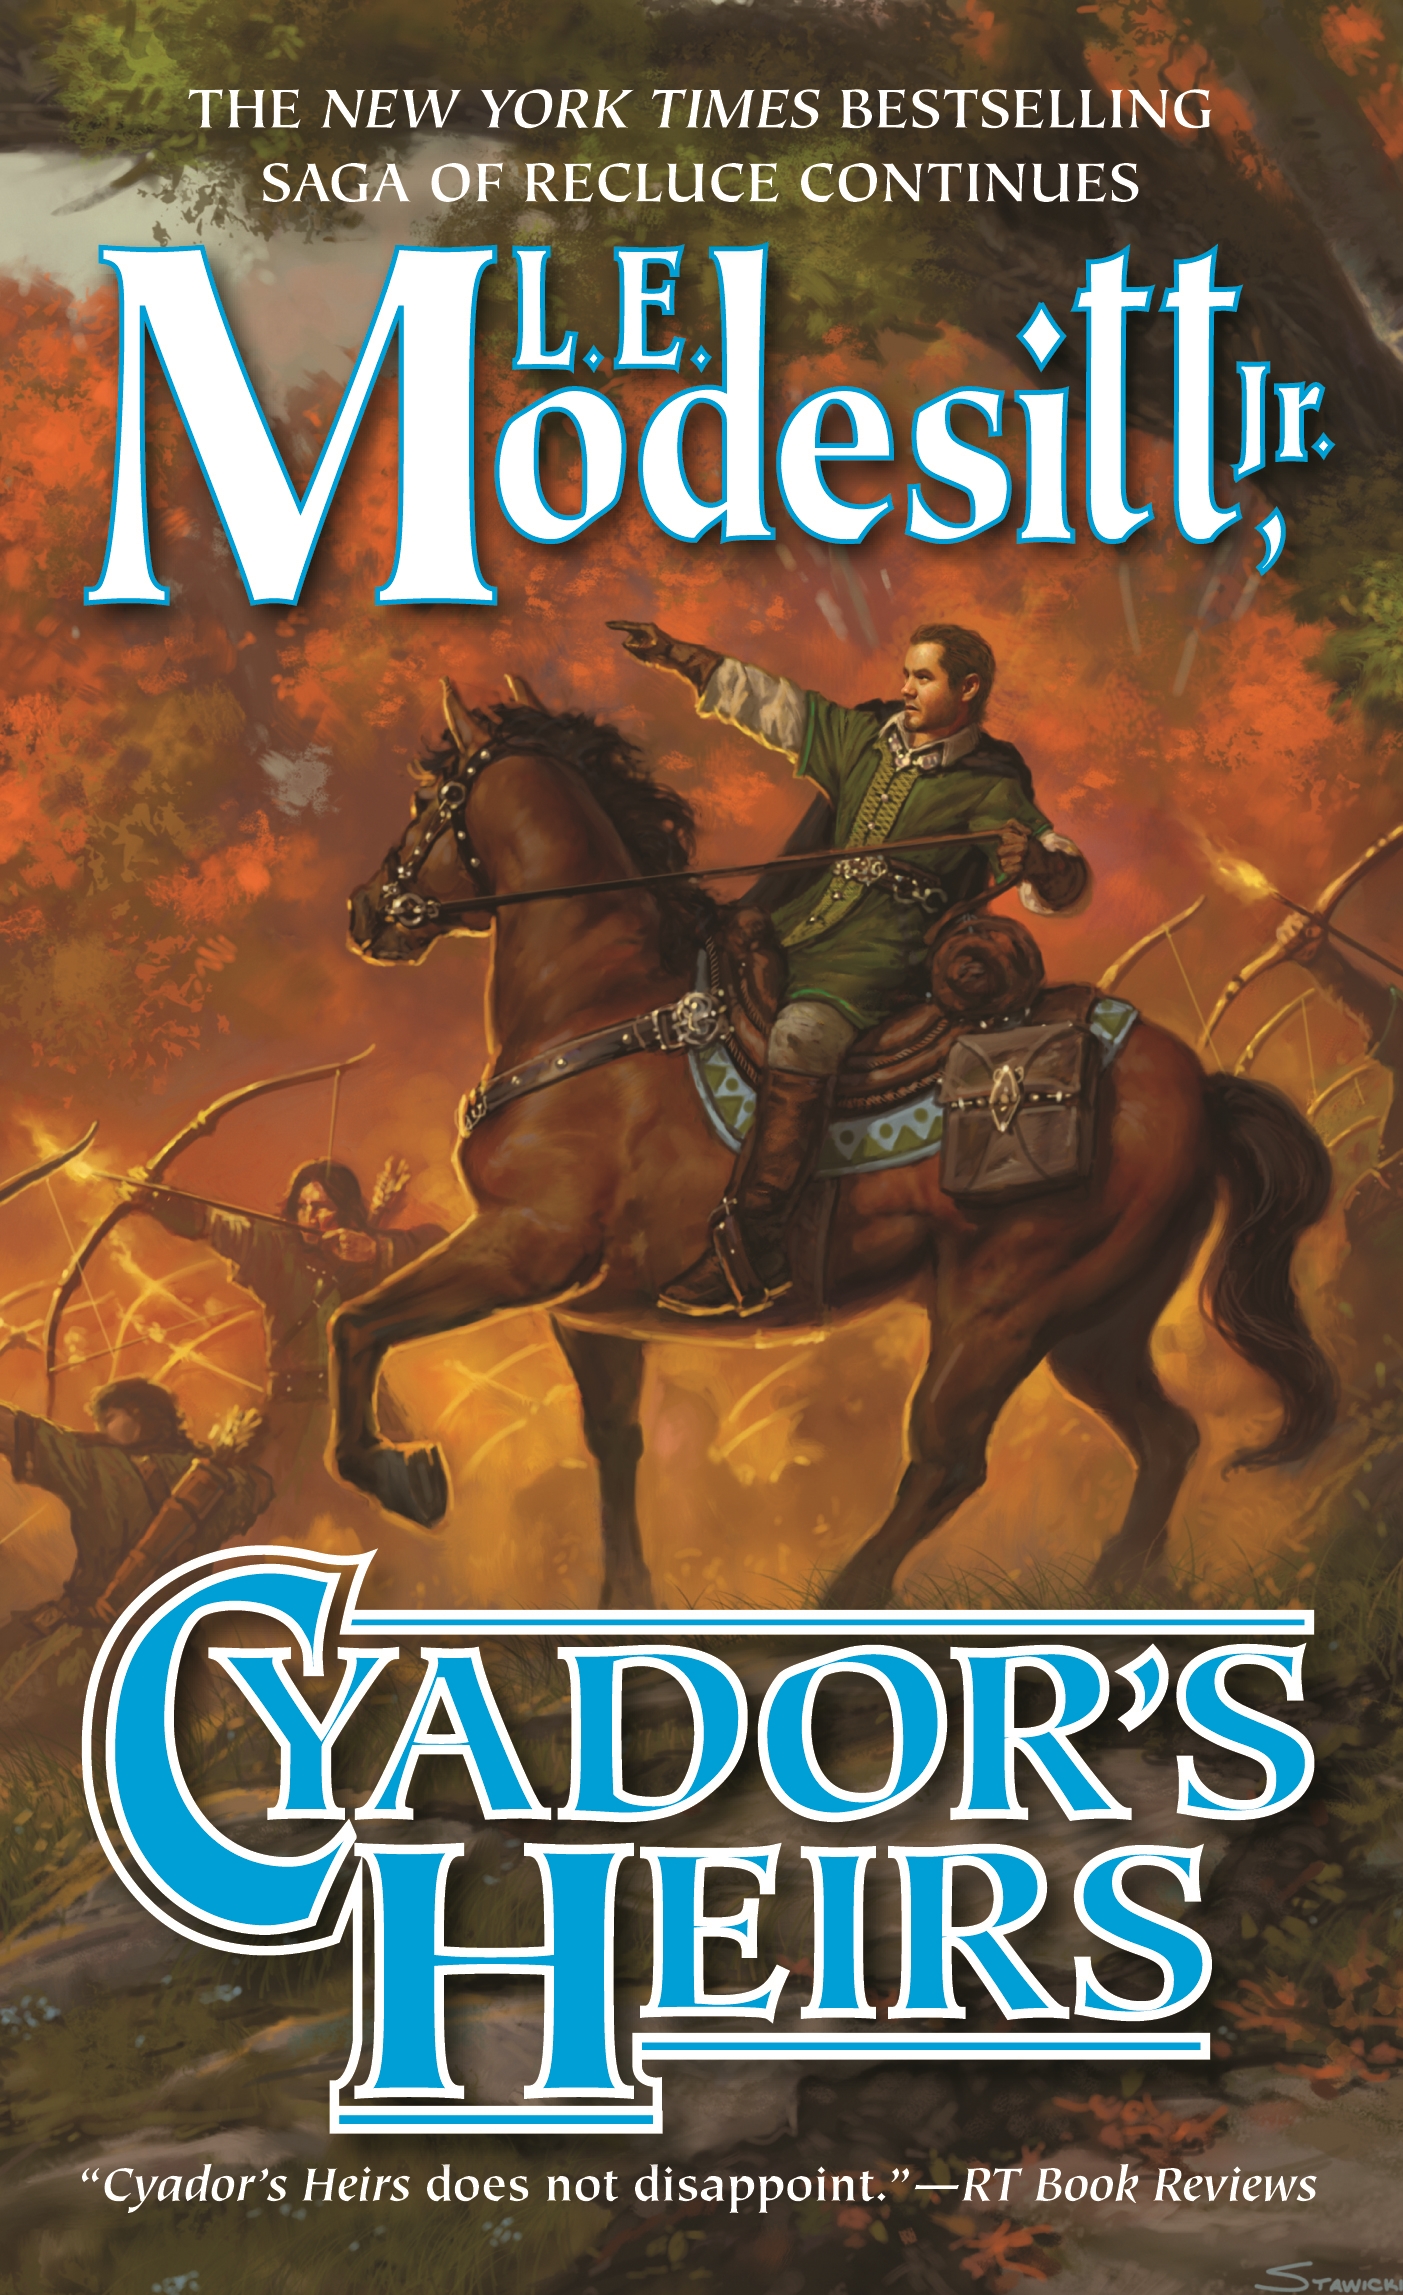 Tor Blog Tour: Cyador's Heirs by L.E. Modesitt, Jr.